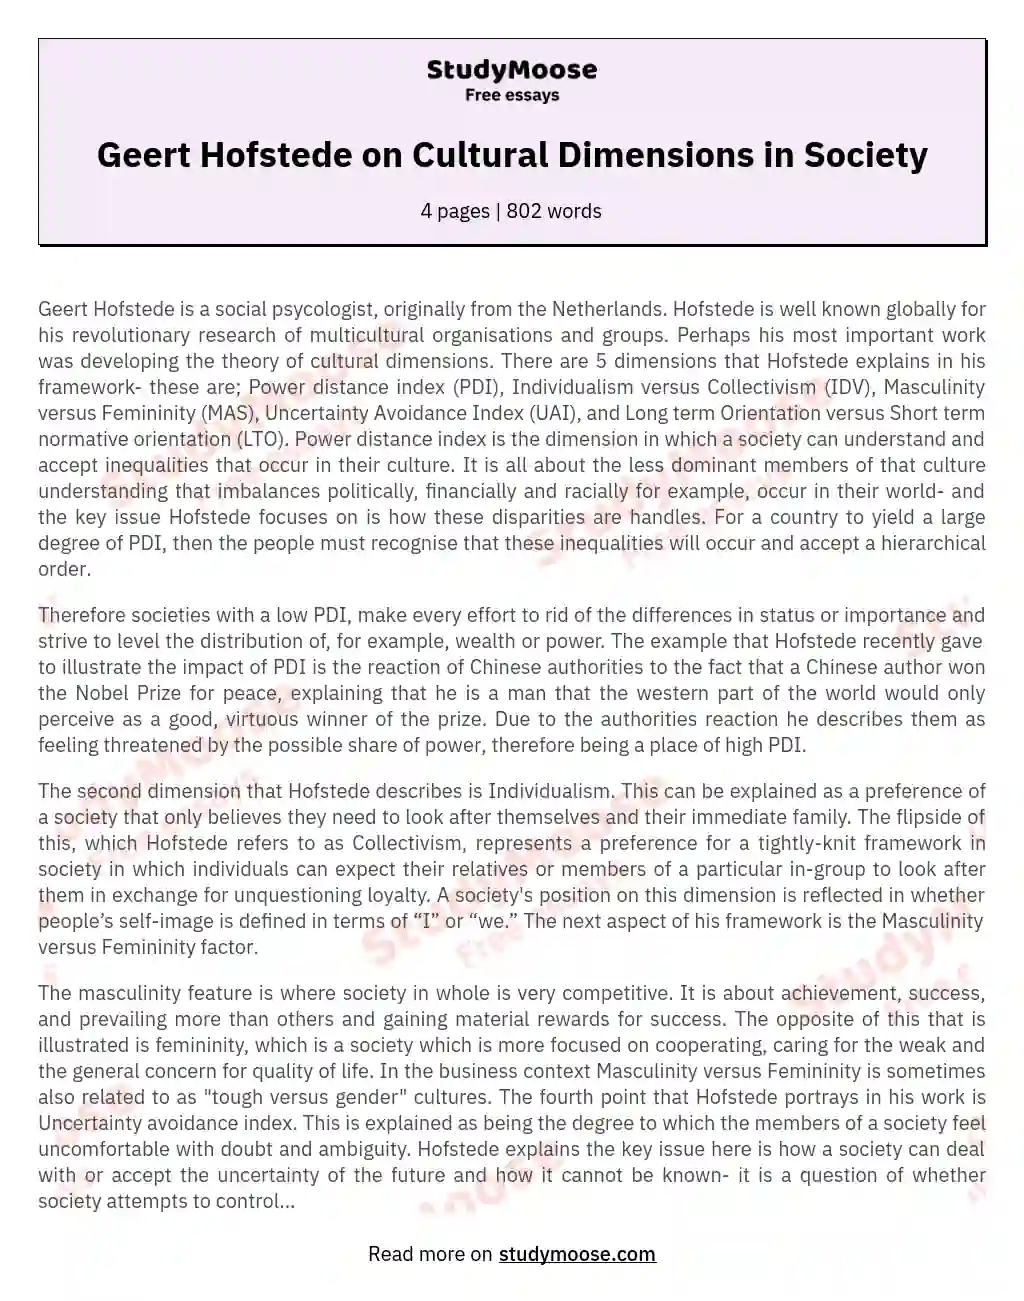 Geert Hofstede on Cultural Dimensions in Society